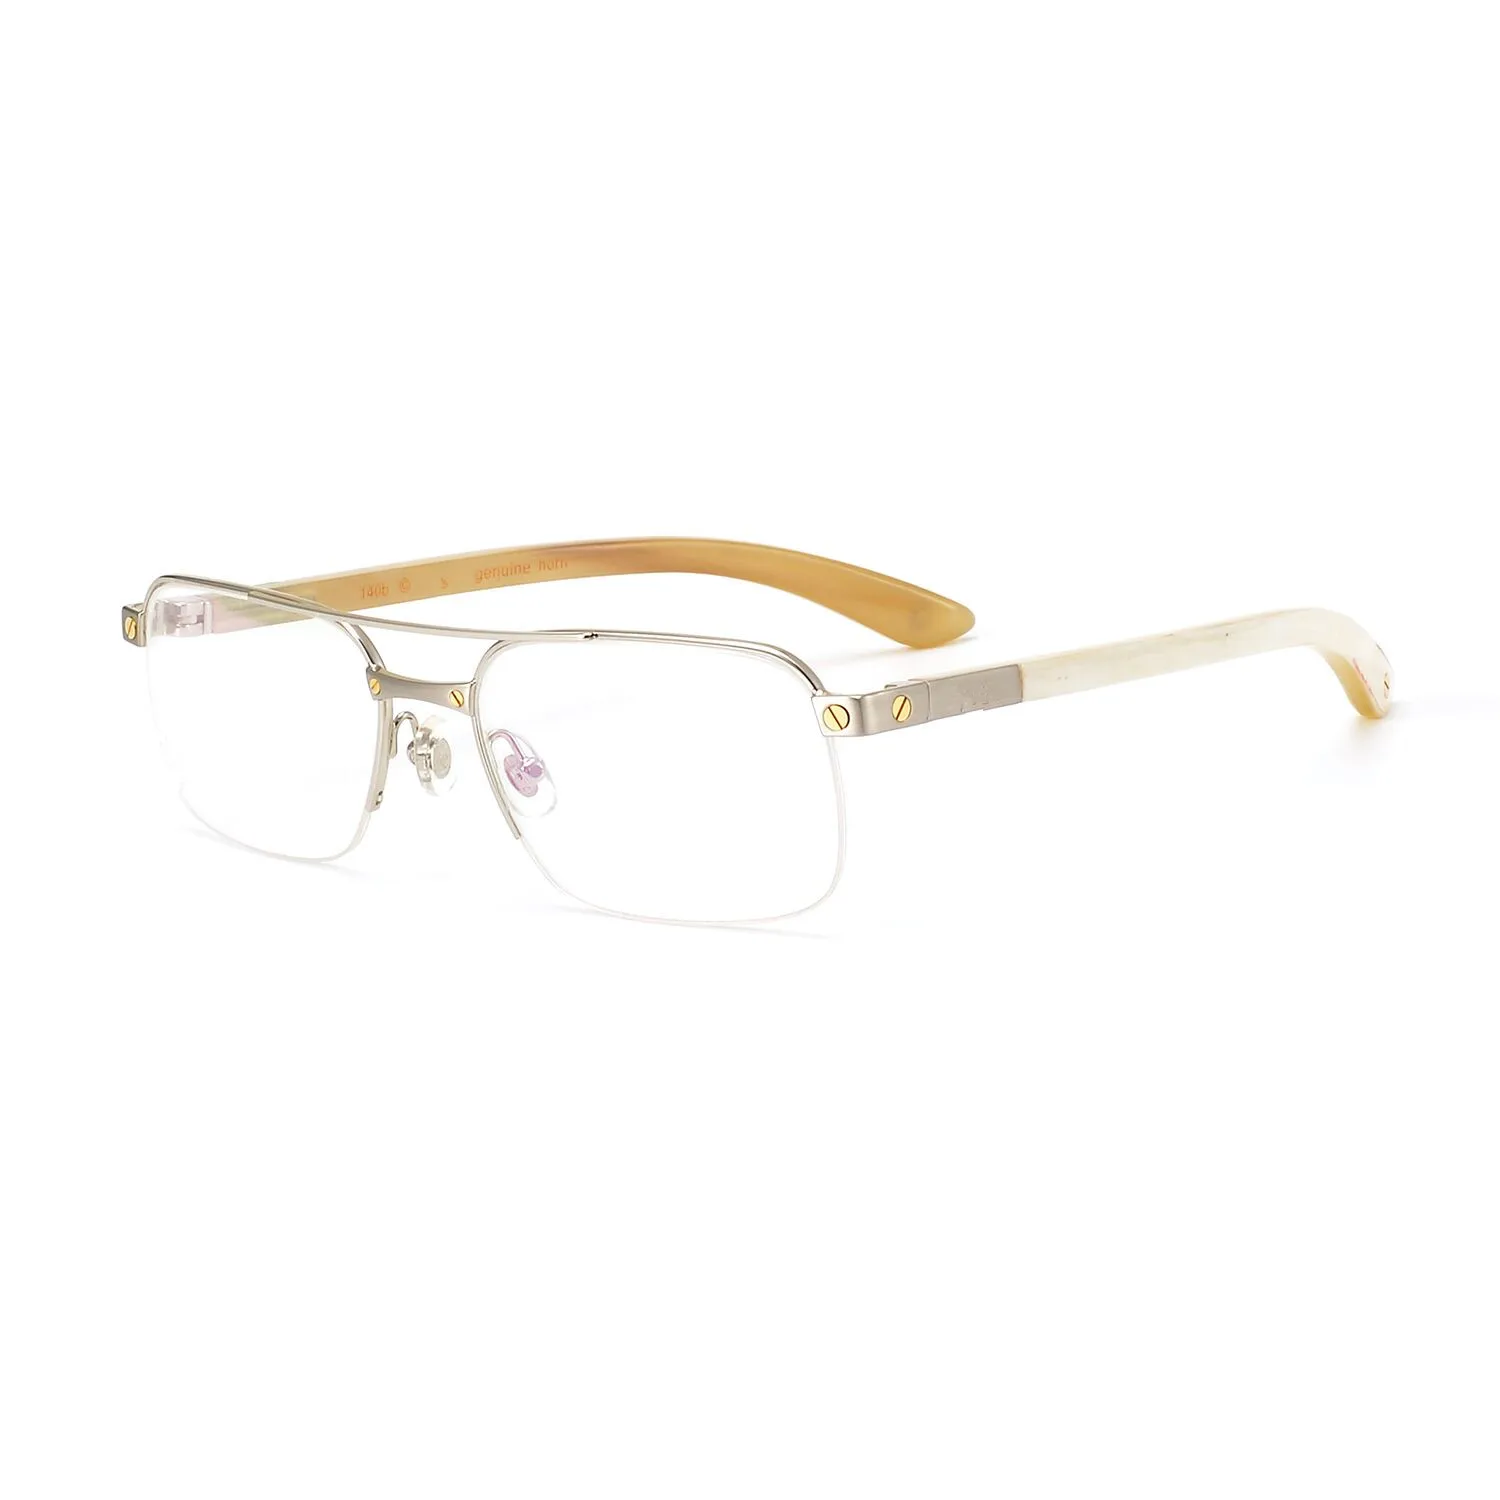 Men's Prescription Glasses Handcrafted Ox Horn Production Fashionable Business Black Myopia Reading Eye Frame